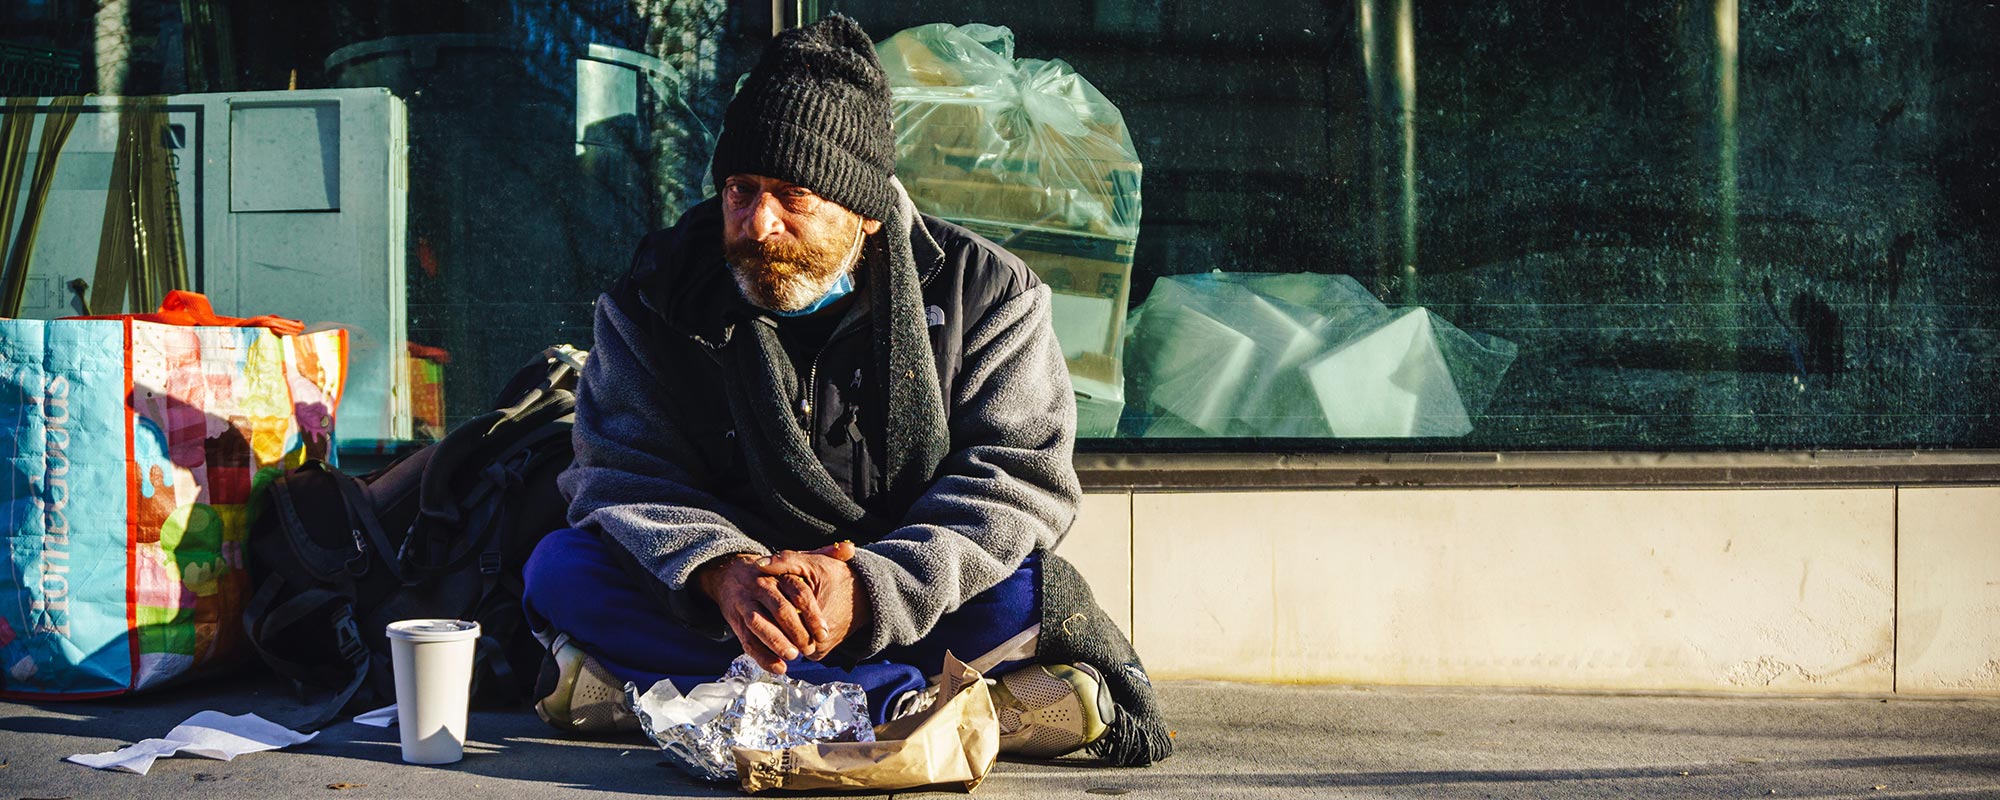 CCLA and Coalition Partners Help Toronto’s Homeless Population